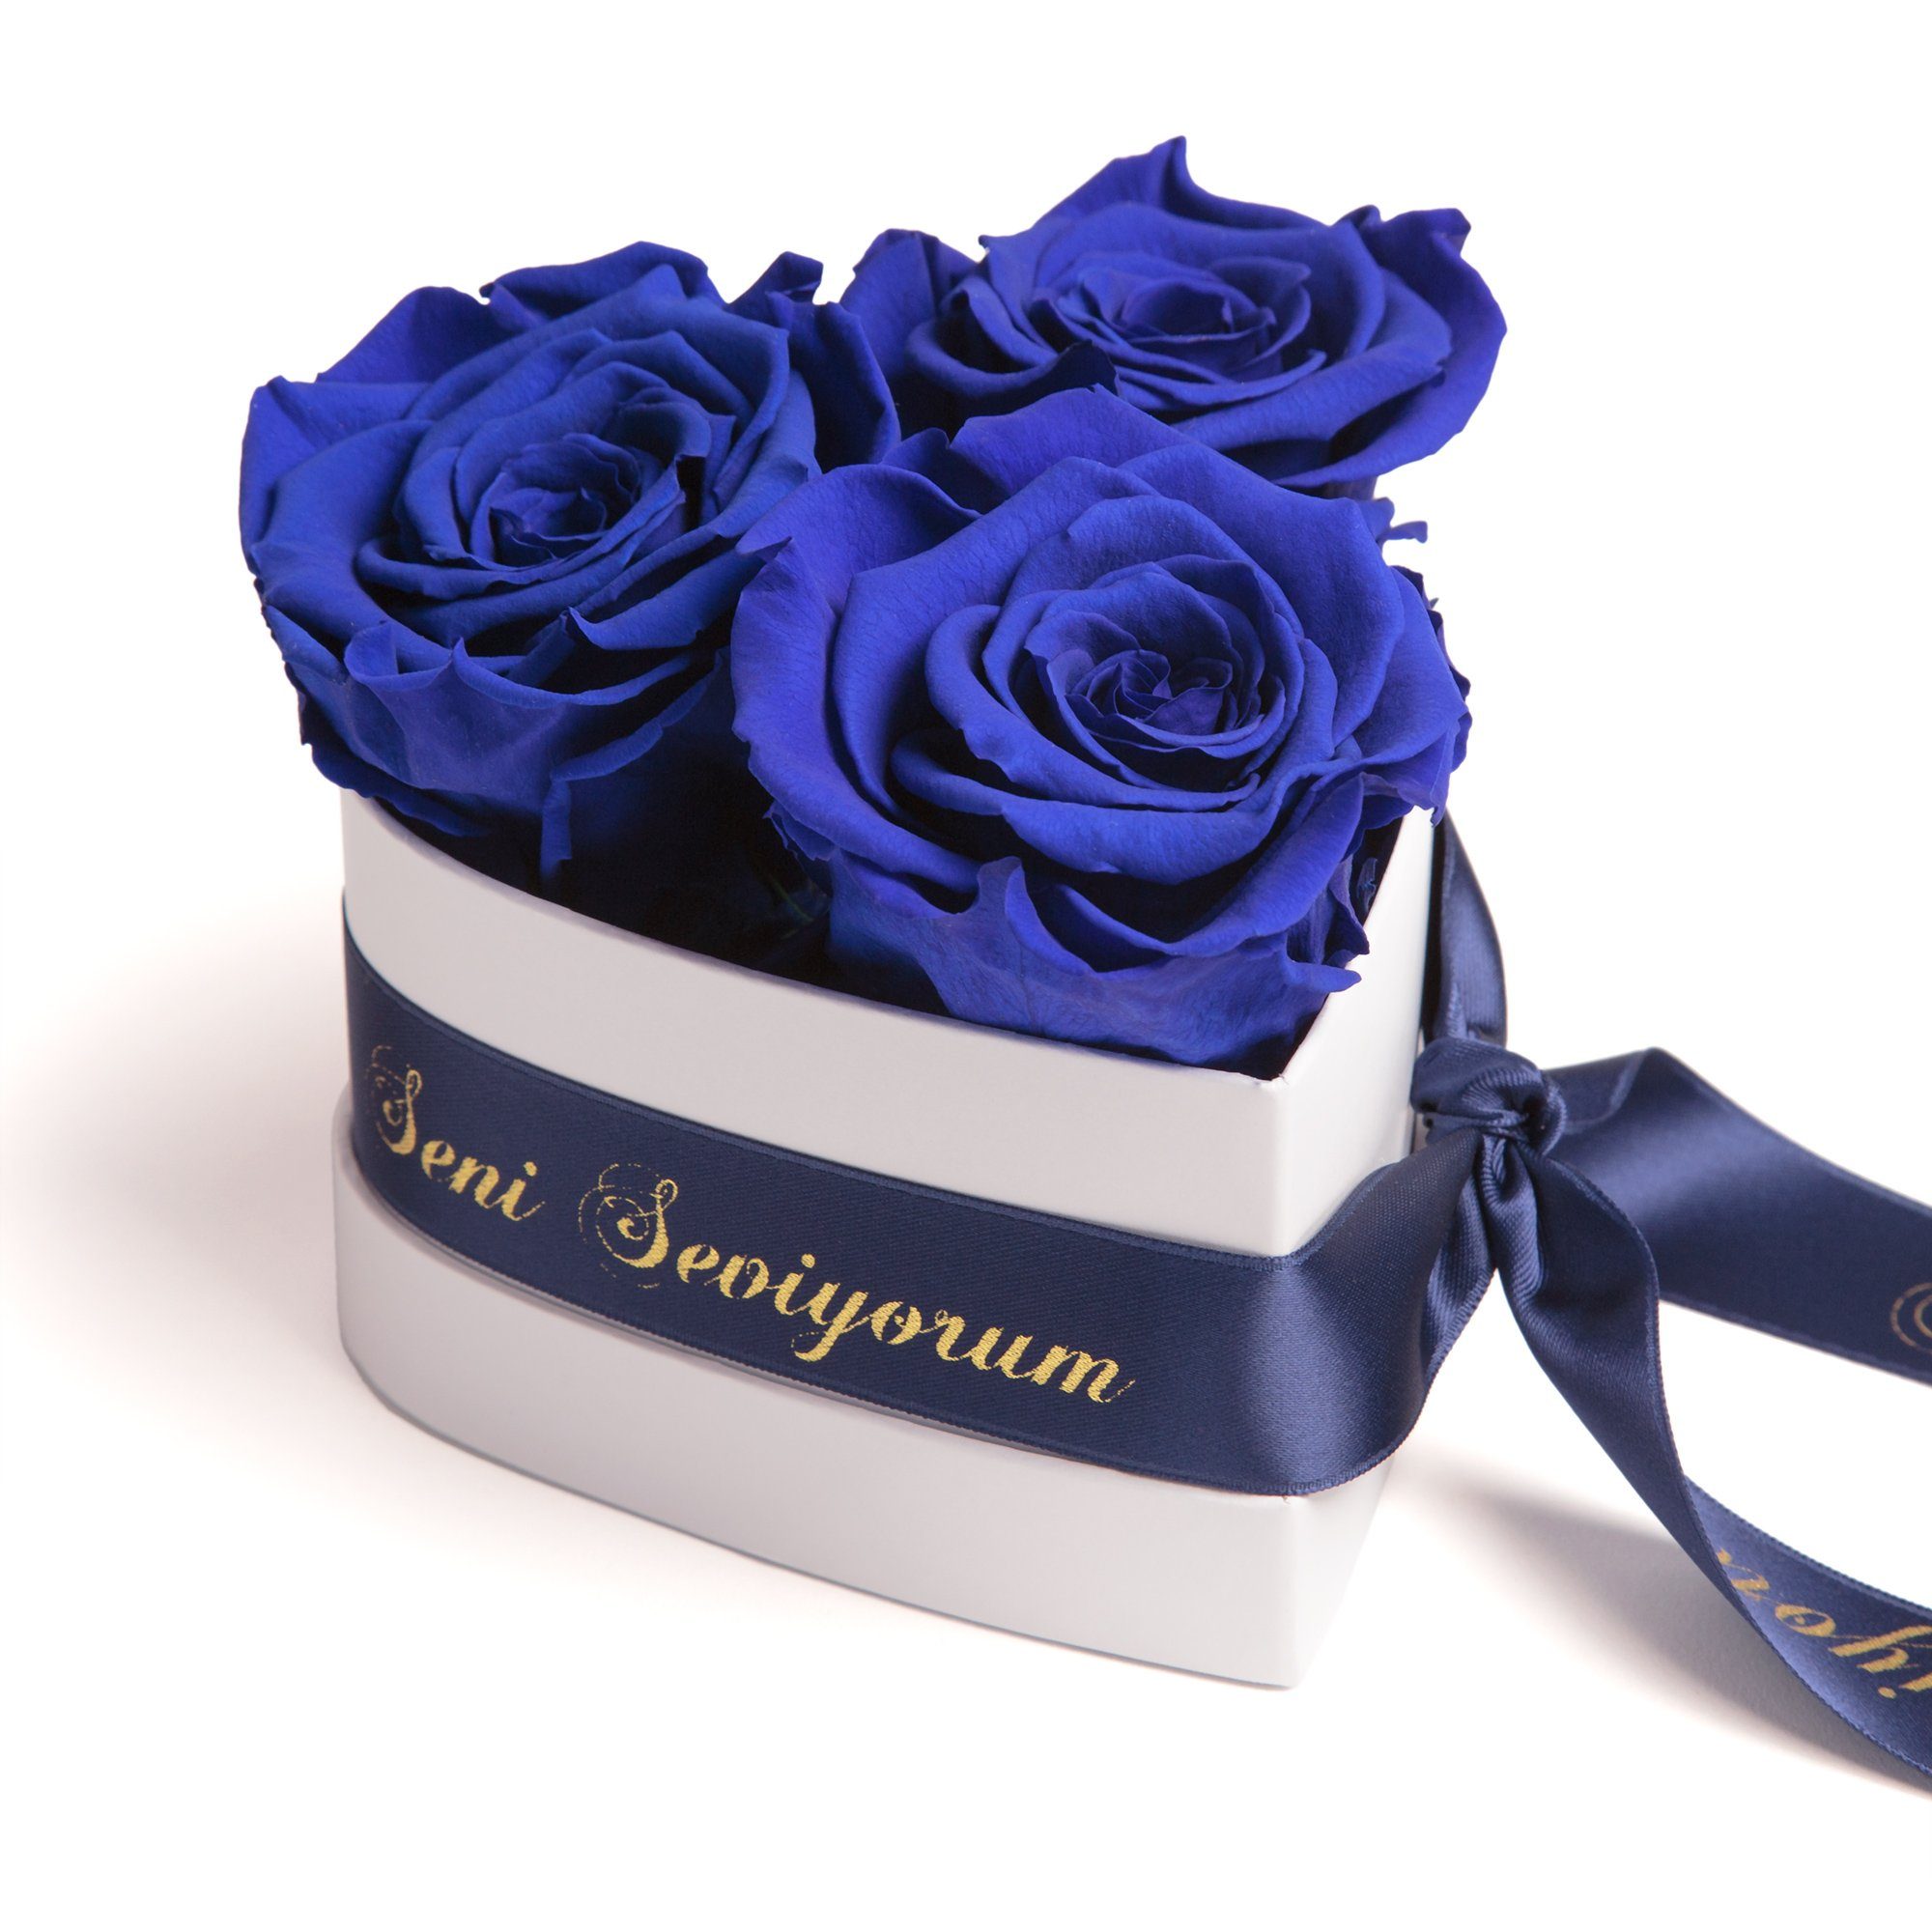 Kunstblume Seni Seviyorum Infinity Rosenbox Herz 3 echte Rosen konserviert Rose, ROSEMARIE SCHULZ Heidelberg, Höhe 10 cm, echte Rosen lang haltbar Blau | Kunstblumen